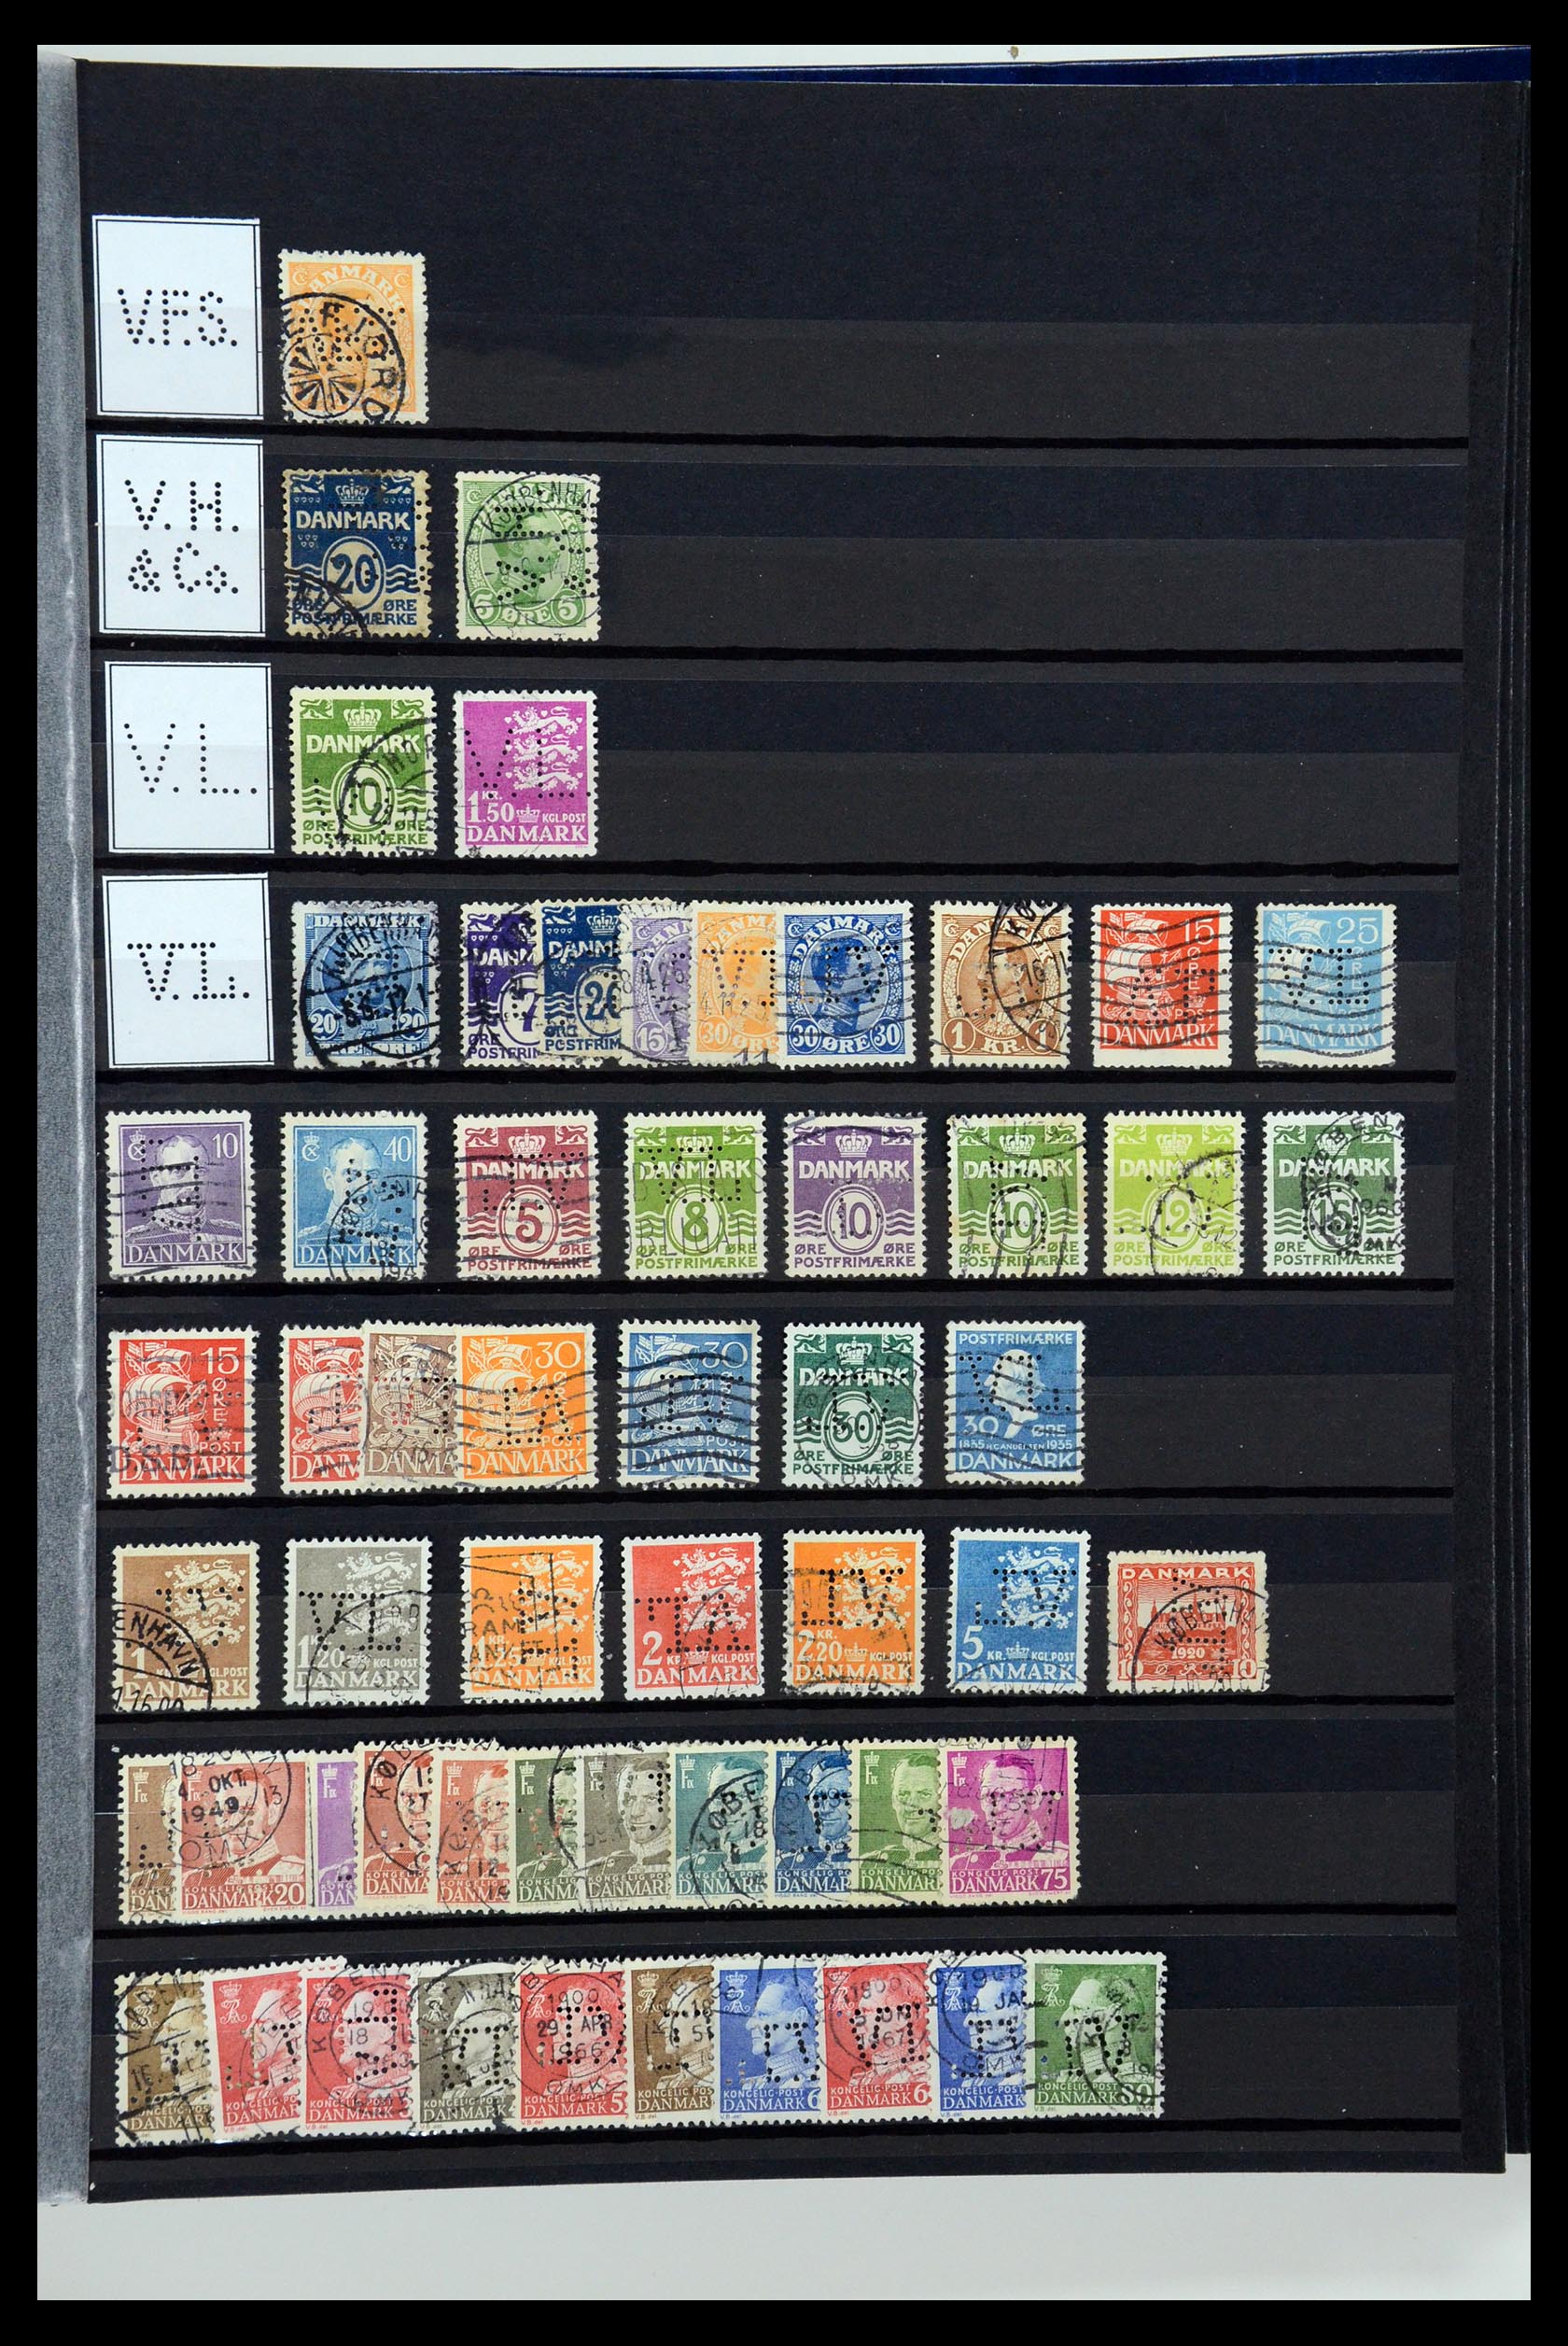 36396 220 - Stamp collection 36396 Denmark perfins.